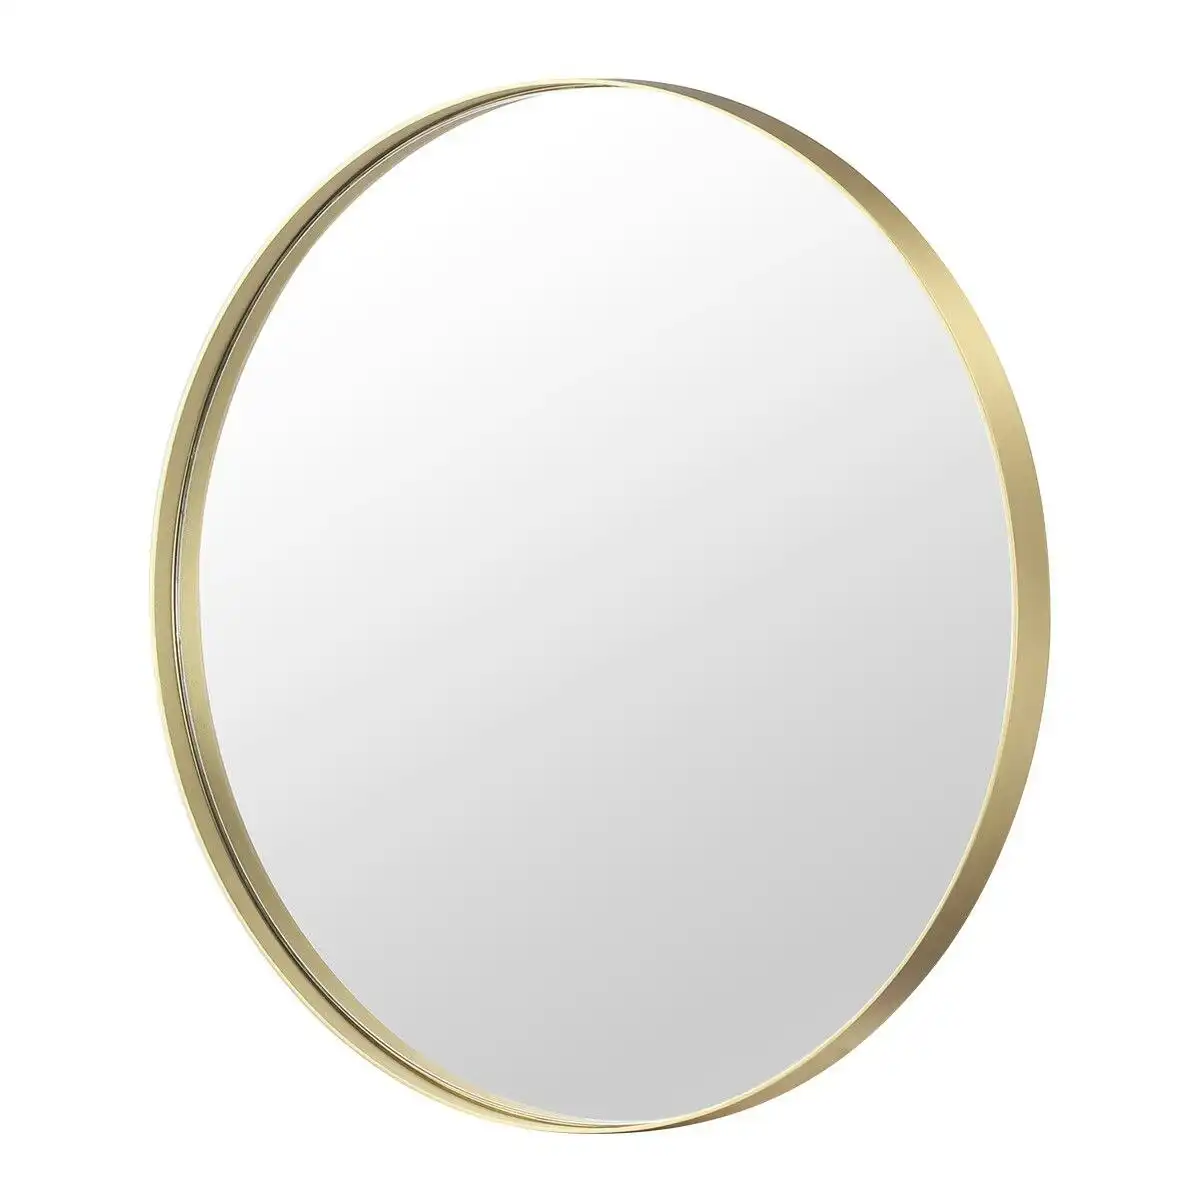 LUXSUITE 60cm Round Wall Mirror Bathroom Vanity Standing Large Bedroom Gold Decorative Mount Circle Hallway Makeup Shower Shaving